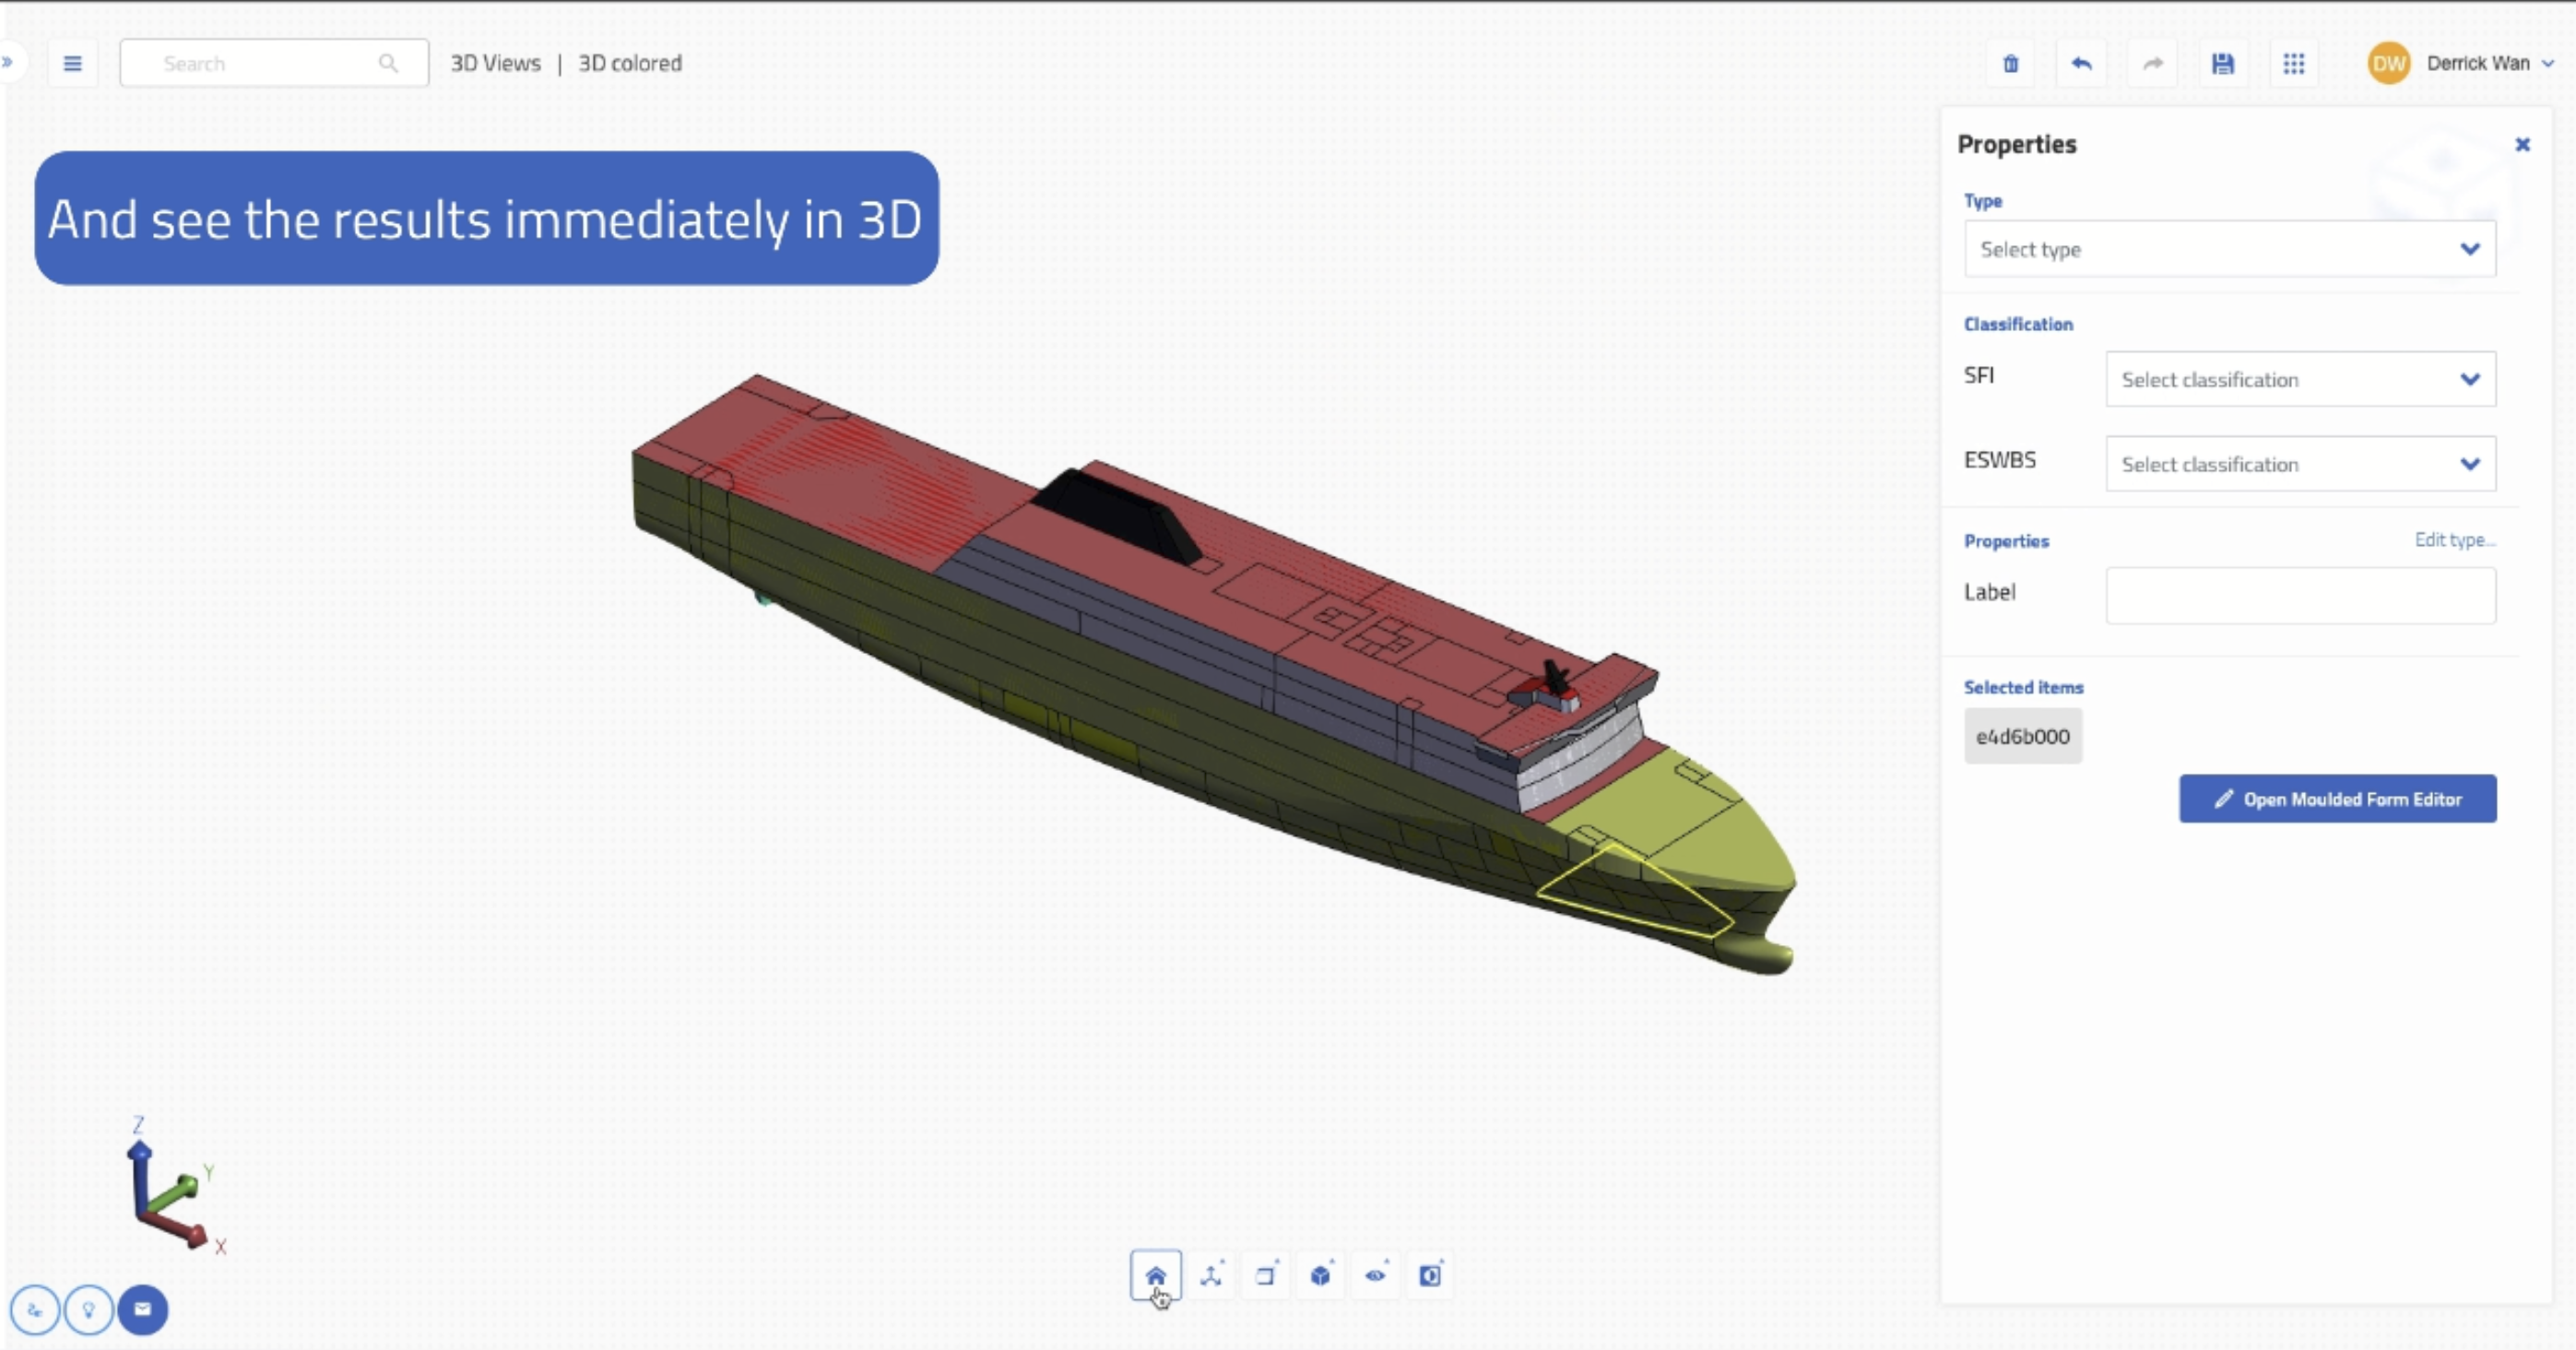 Ship Design Software Video - Naval Architect Cloud Platform